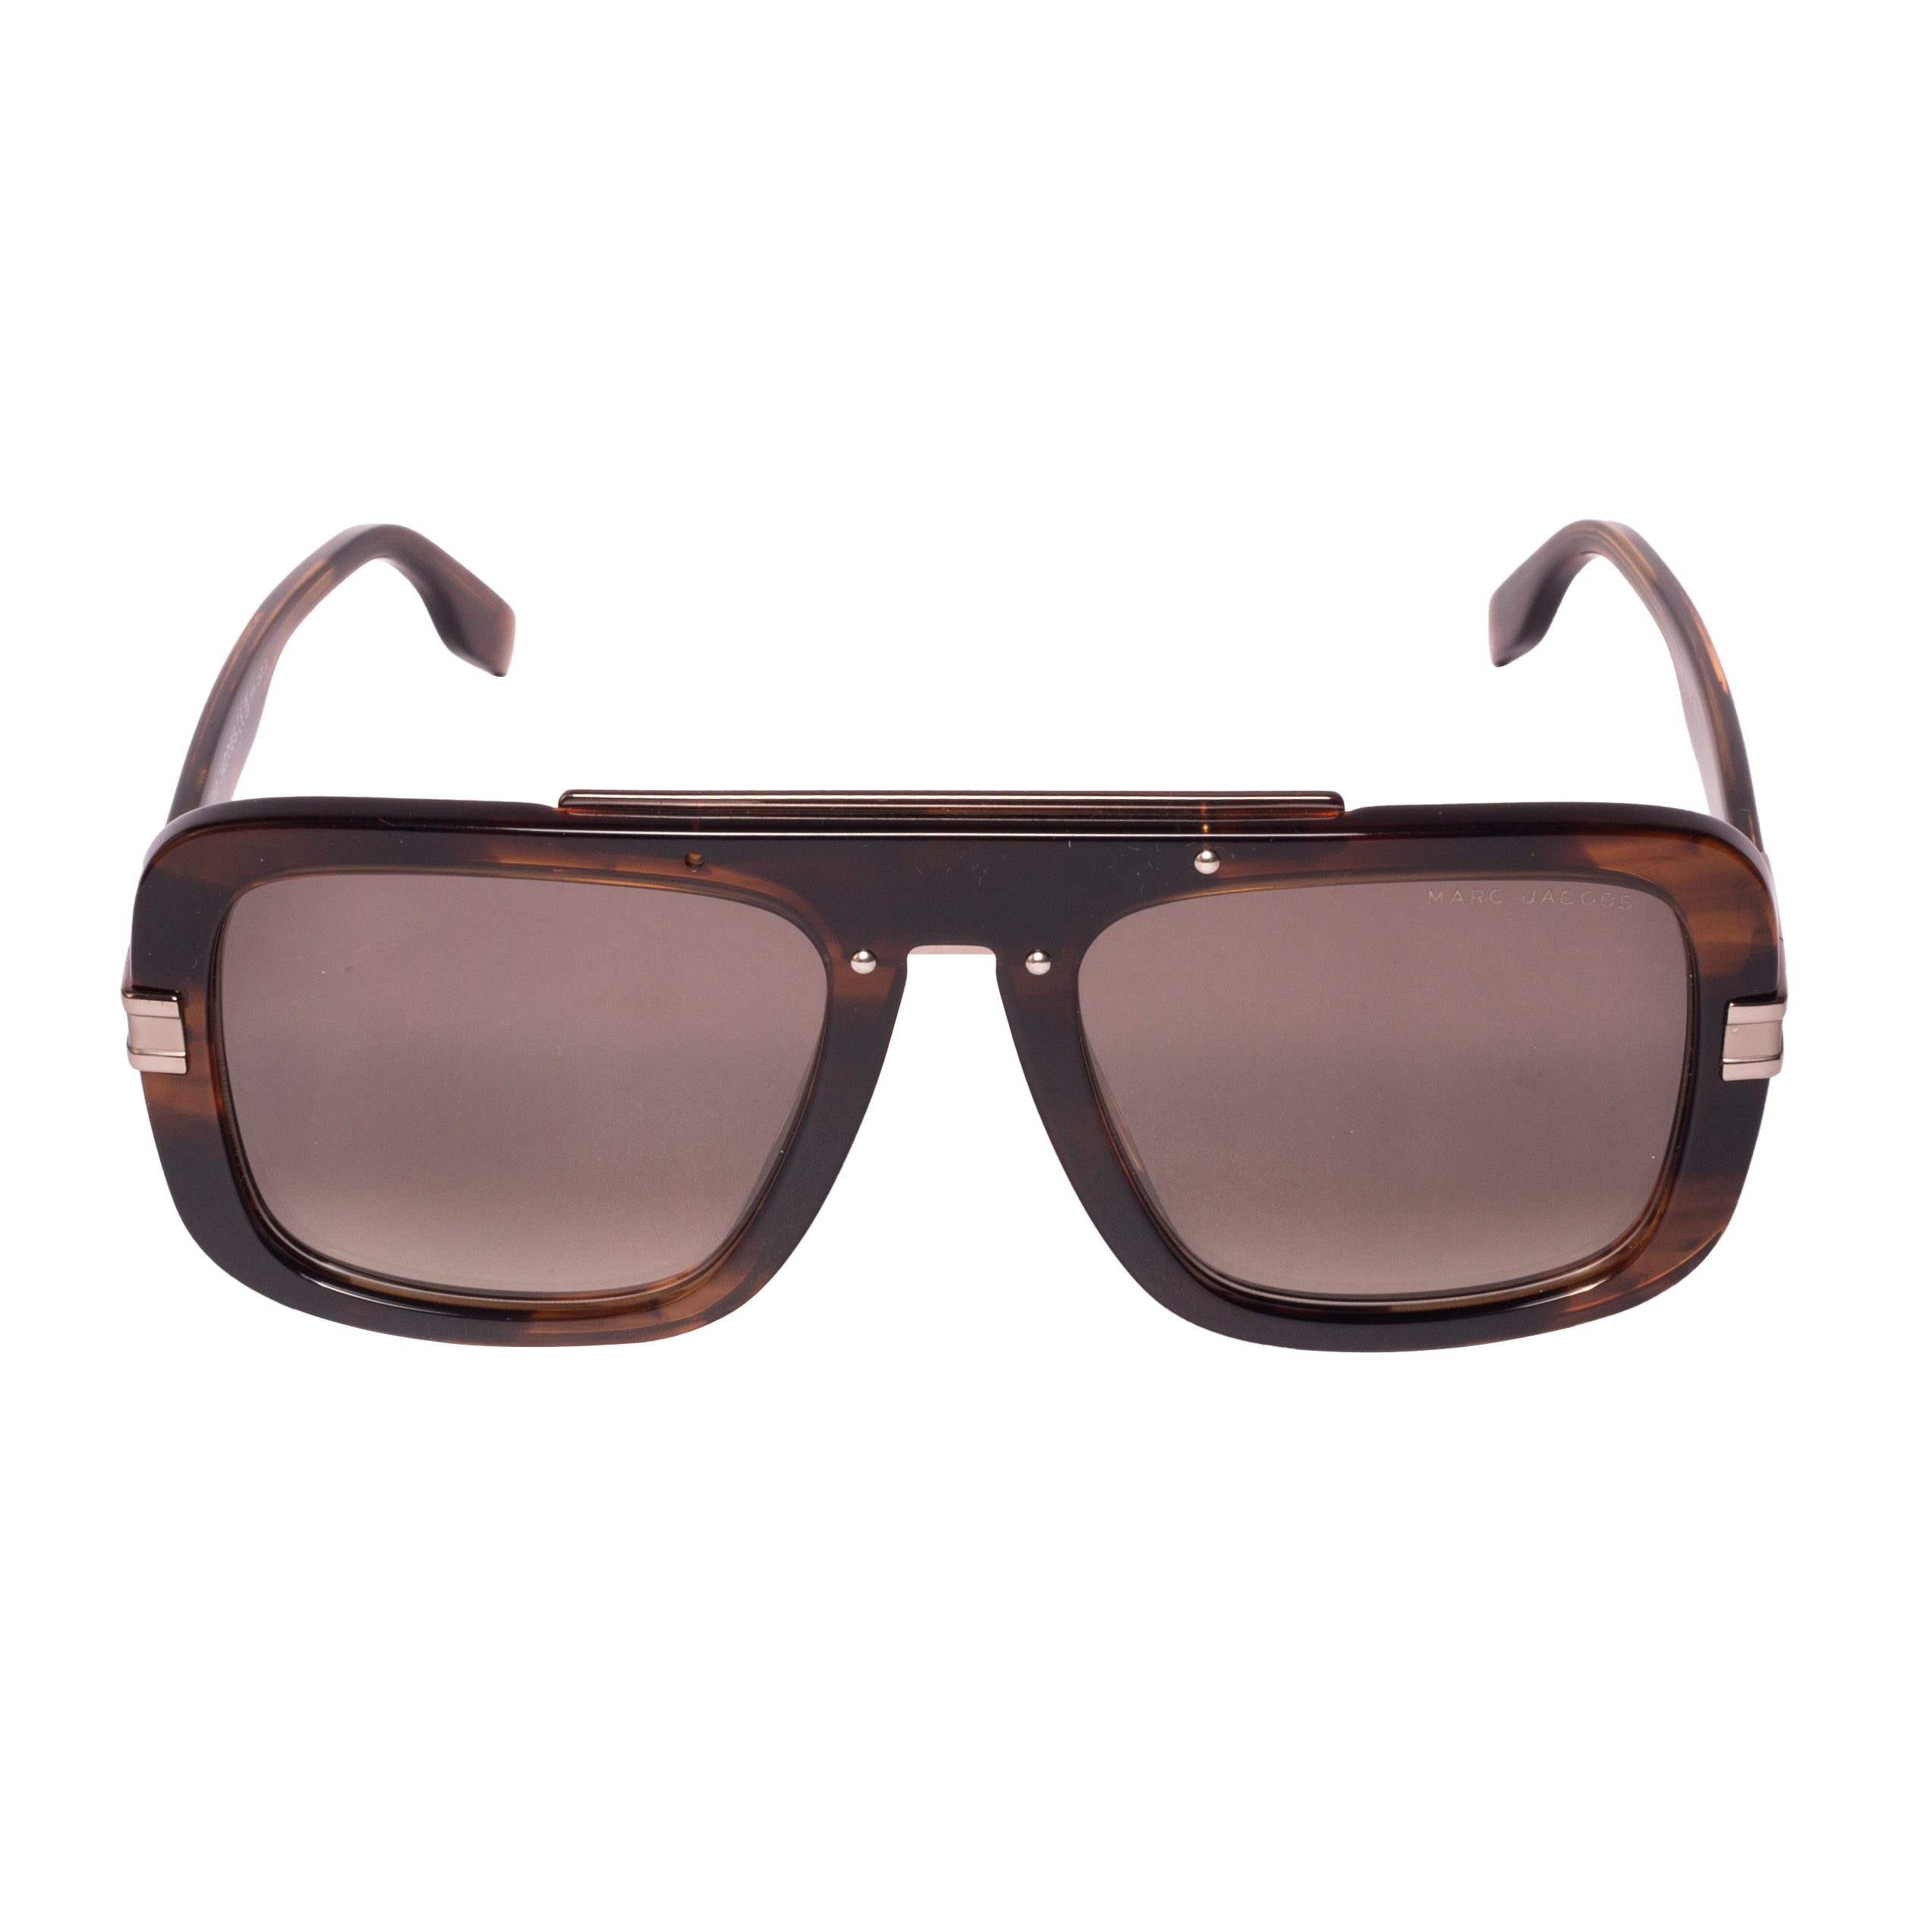 Marc Jacob-MARC 670/S-55-EX4-H Sunglasses - Premium Sunglasses from Marc Jacob - Just Rs. 19900! Shop now at Laxmi Opticians